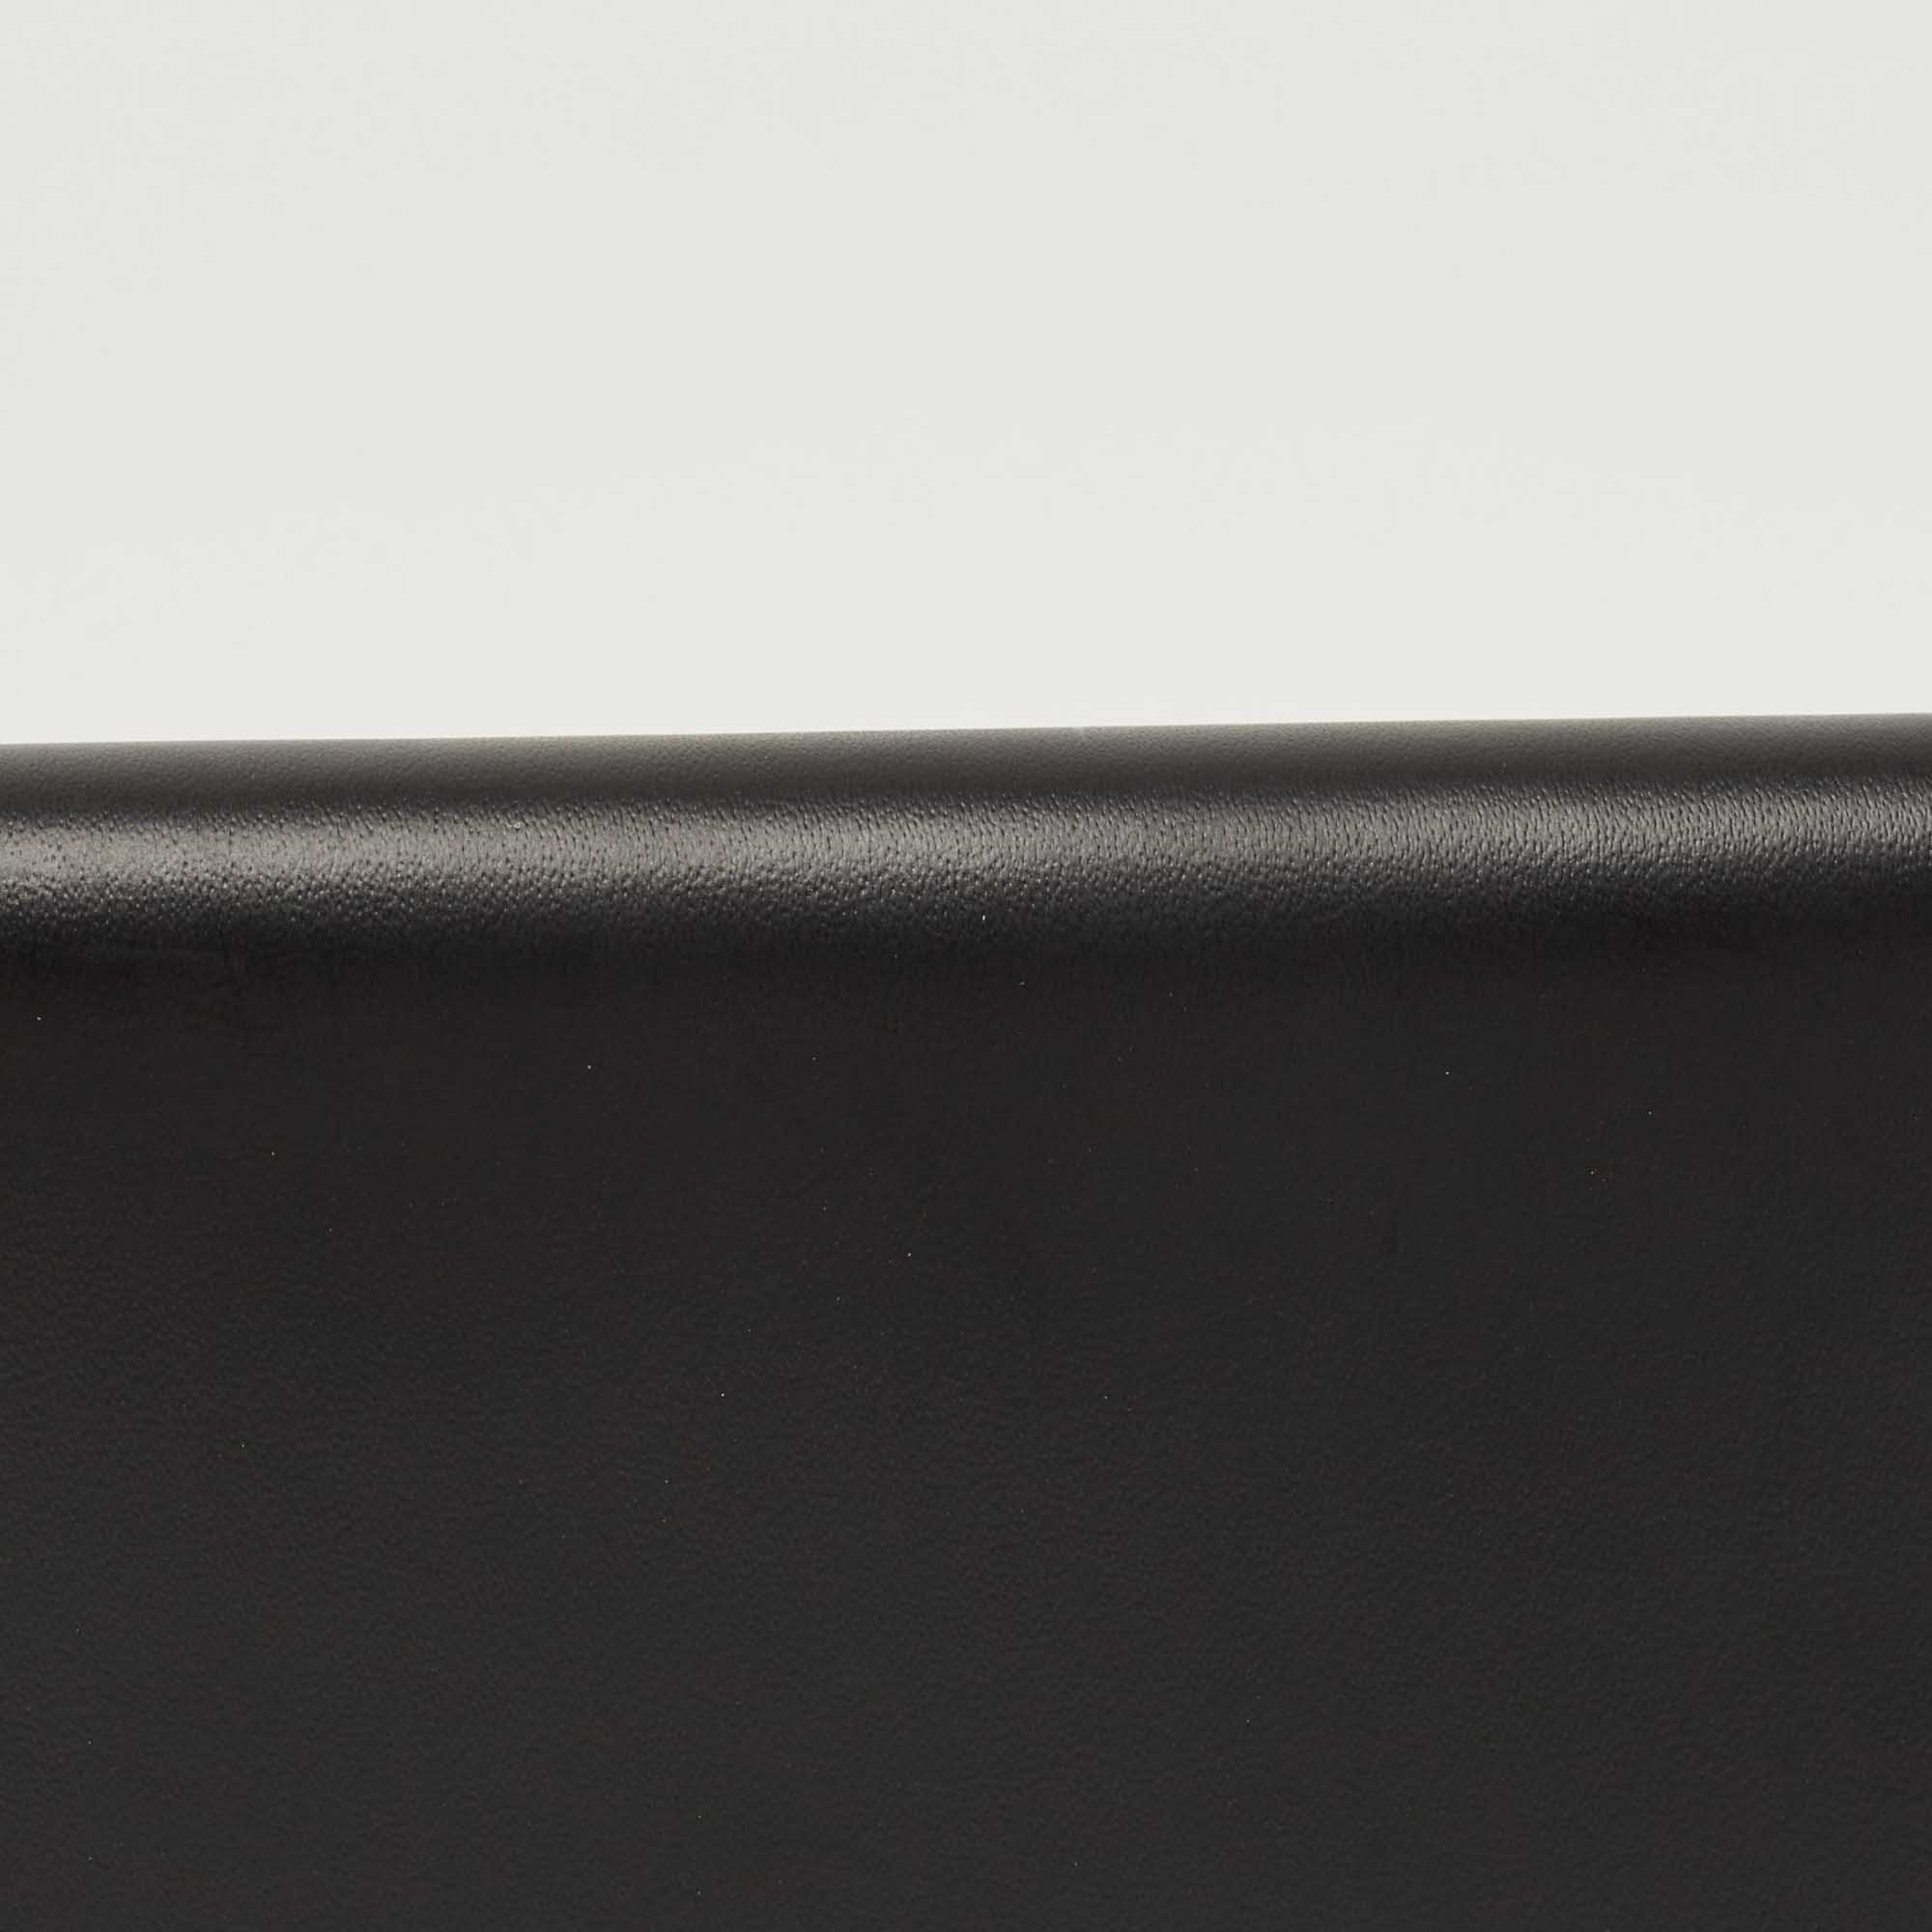 S.T. Dupont Black Leather Bi Fold Card Case